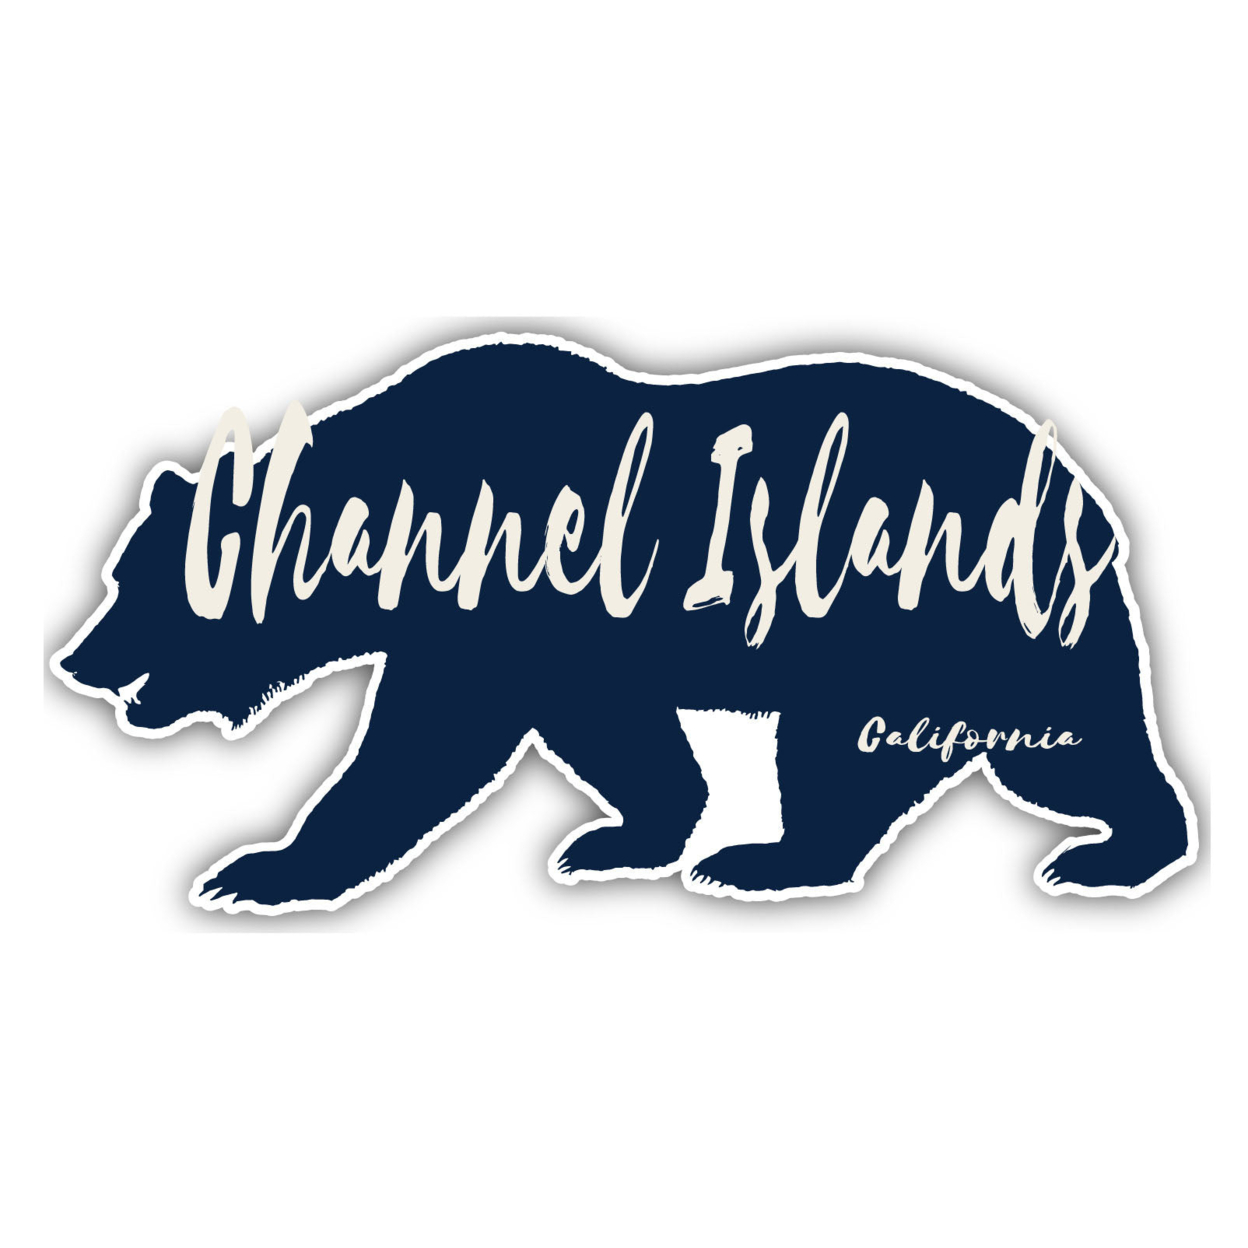 Channel Islands California Souvenir Decorative Stickers (Choose Theme And Size) - Single Unit, 10-Inch, Bear